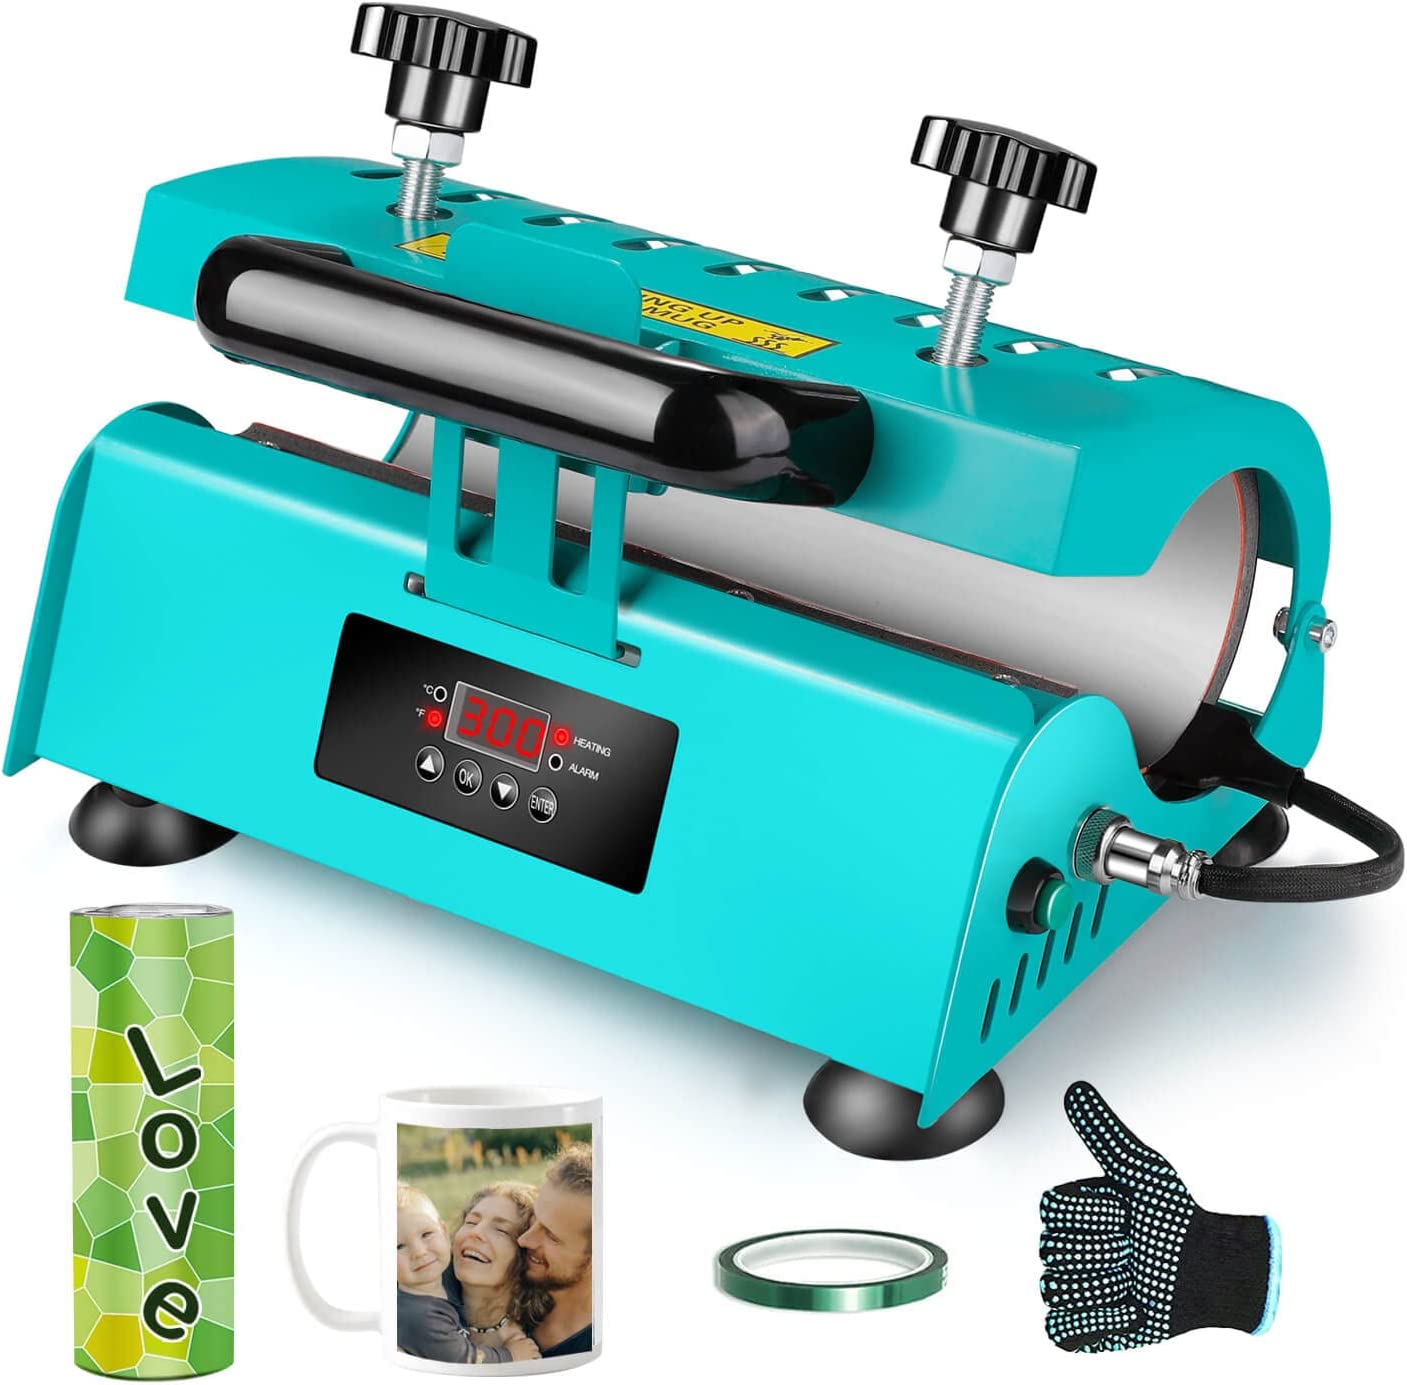 Easydiy 110 V Portable Tumbler Heat Press Machine [...]